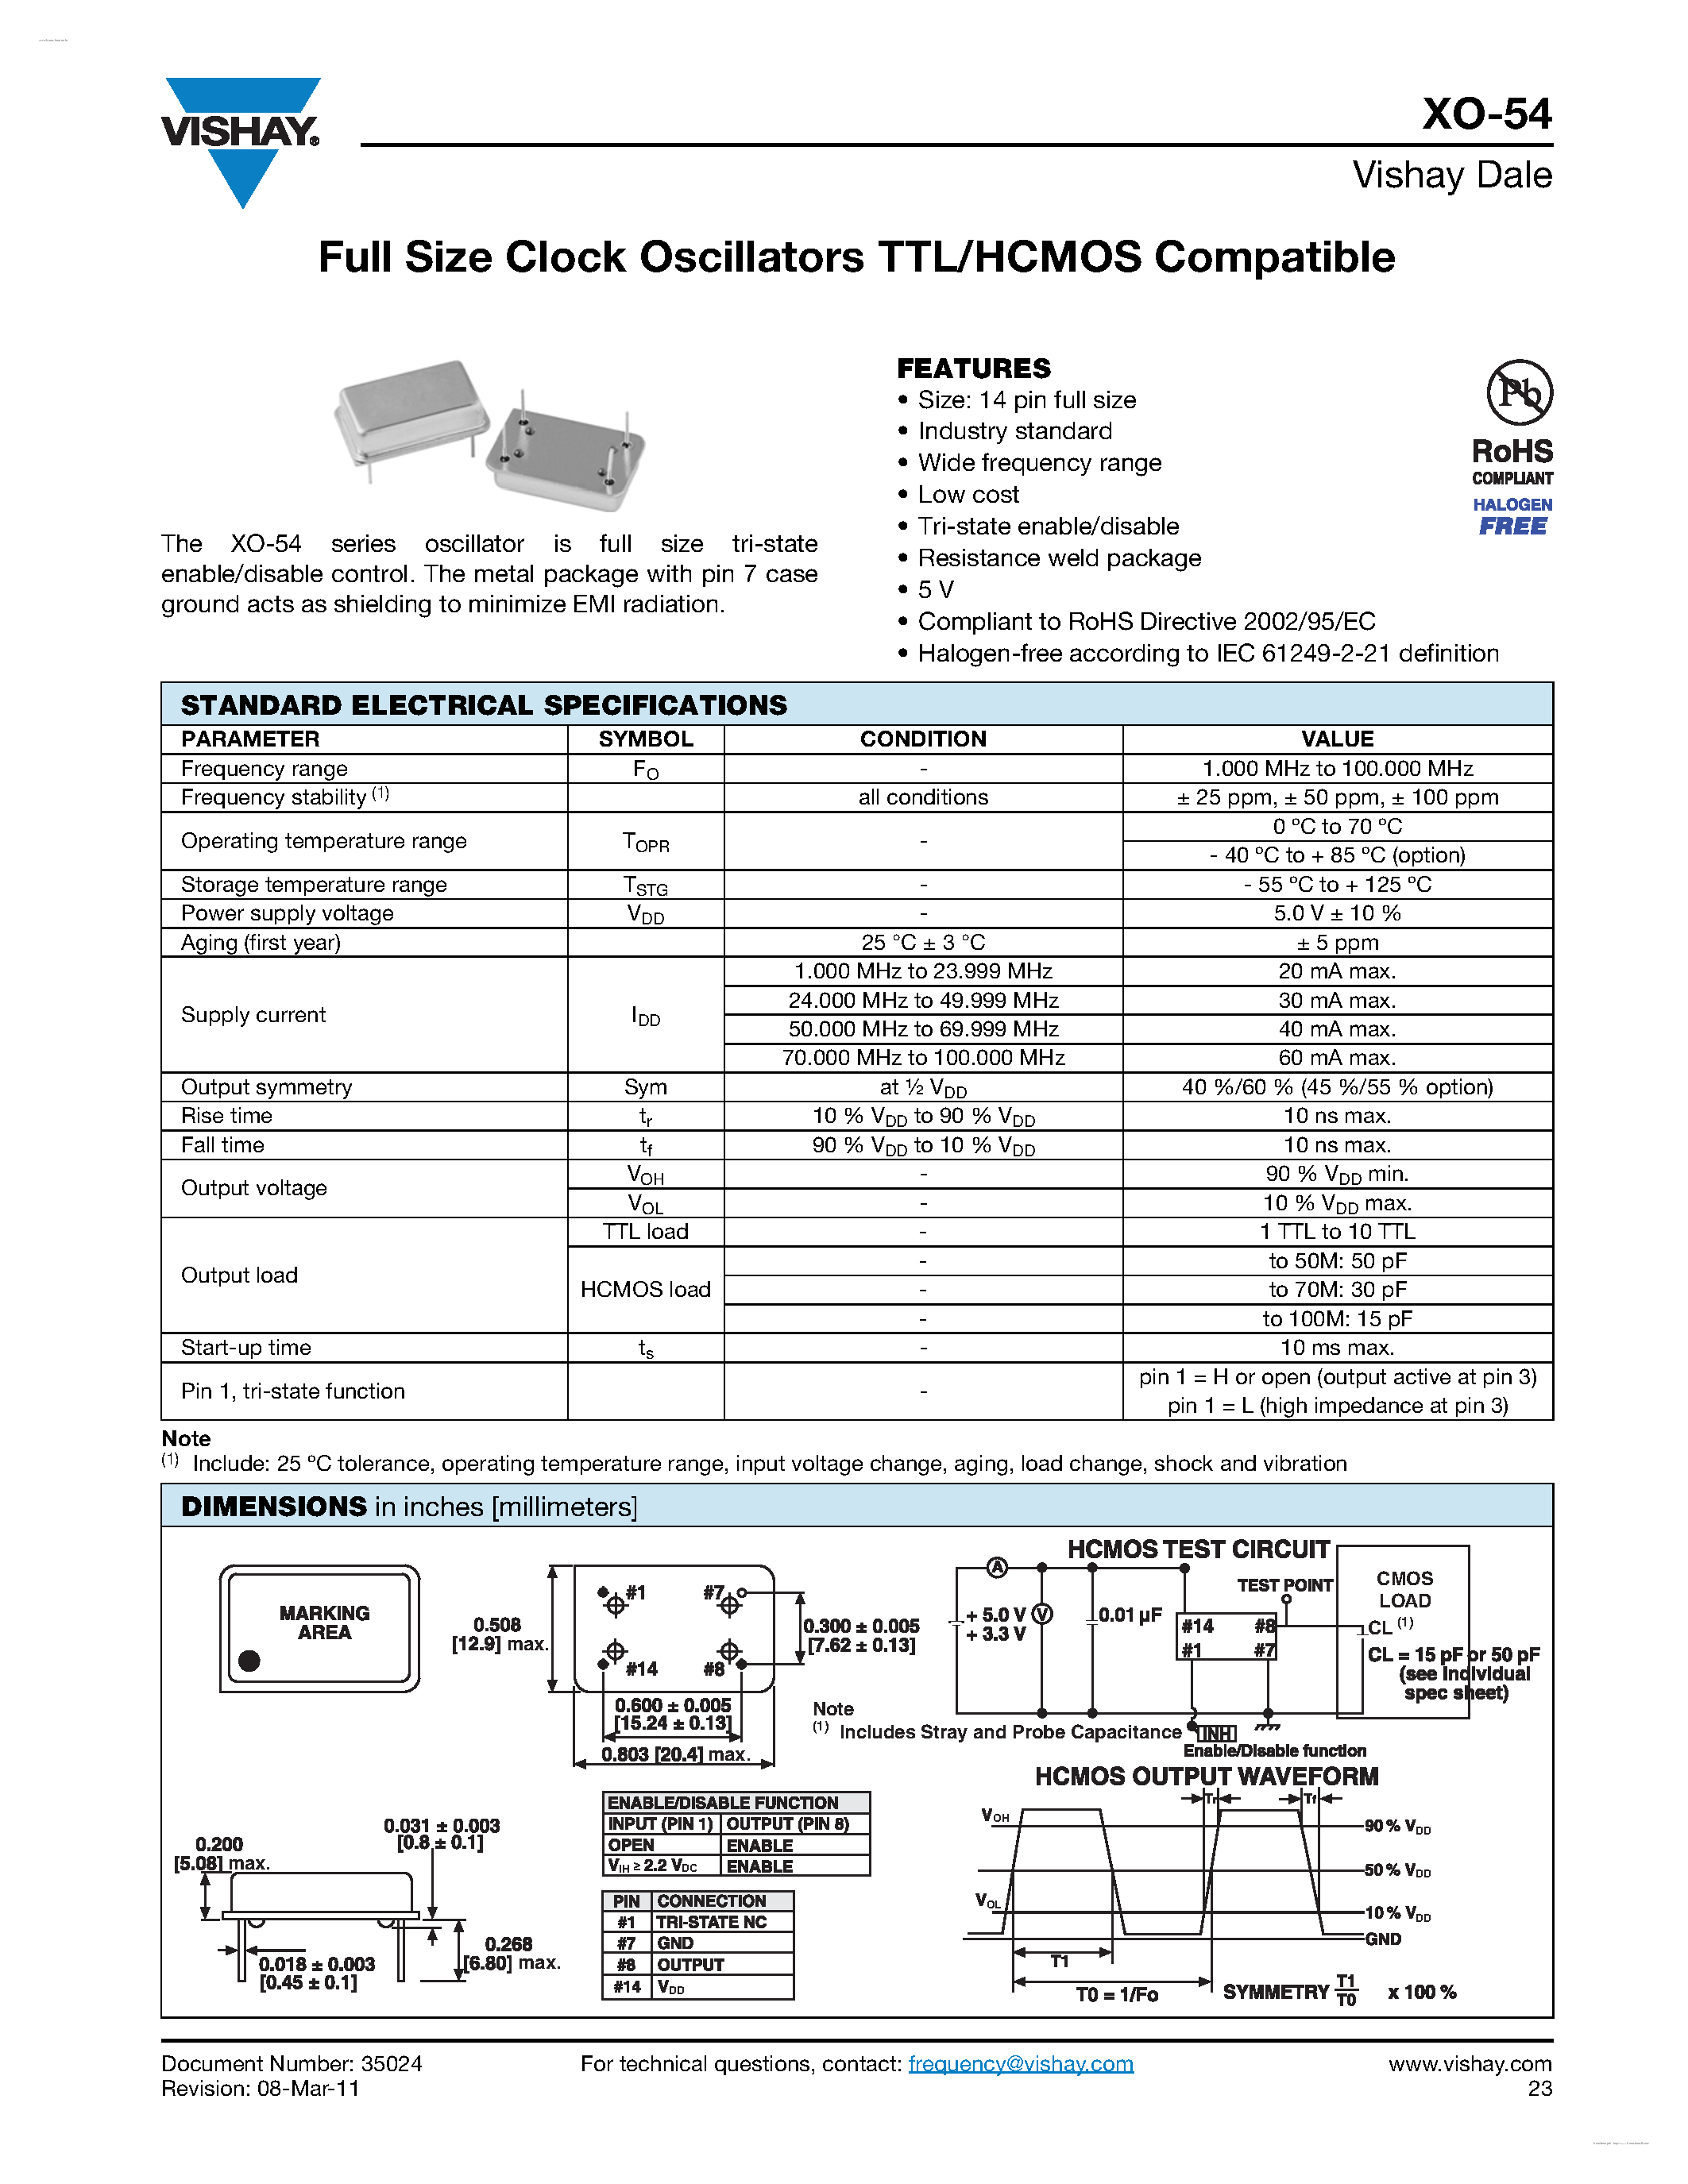 Datasheet XO-54 - Full Size Clock Oscillators TTL/HCMOS Compatible page 1